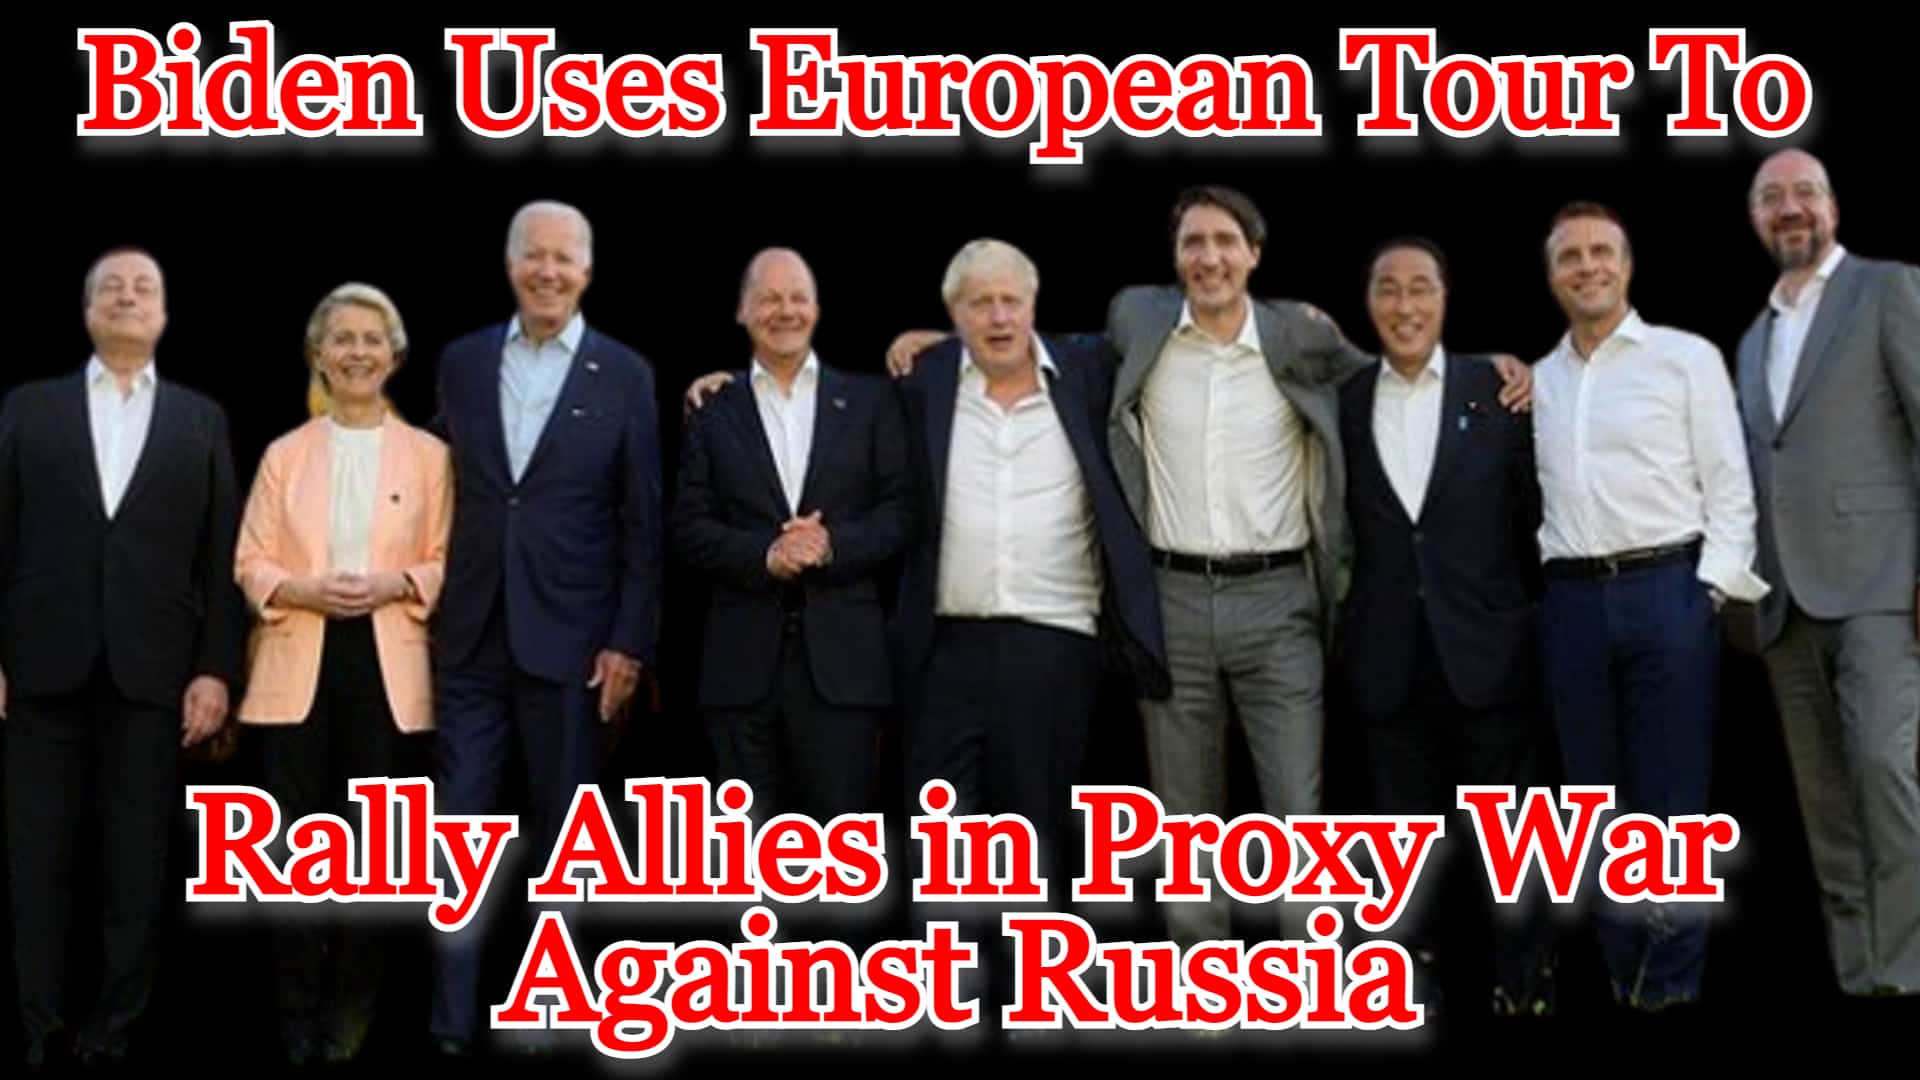 COI #295: Biden Uses European Tour to Rally Allies in Proxy War Against Russia